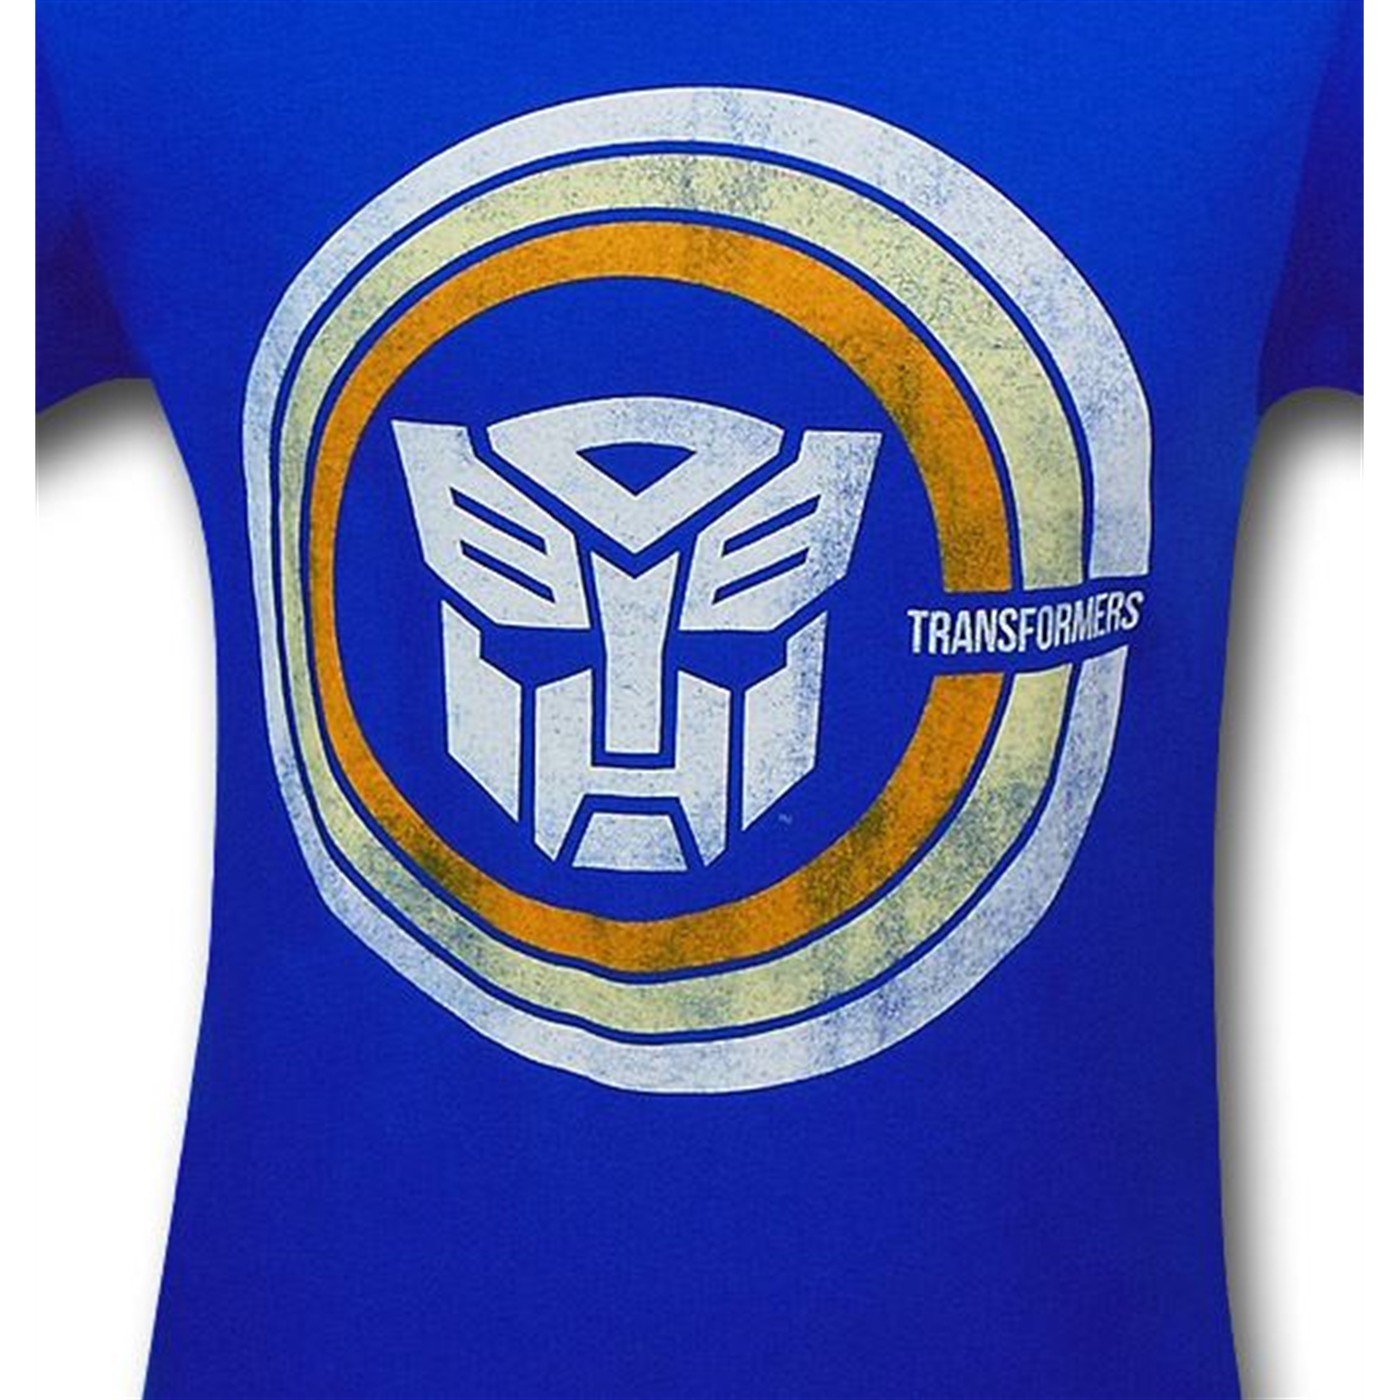 Transformers Ringed Autobot Symbol T-Shirt